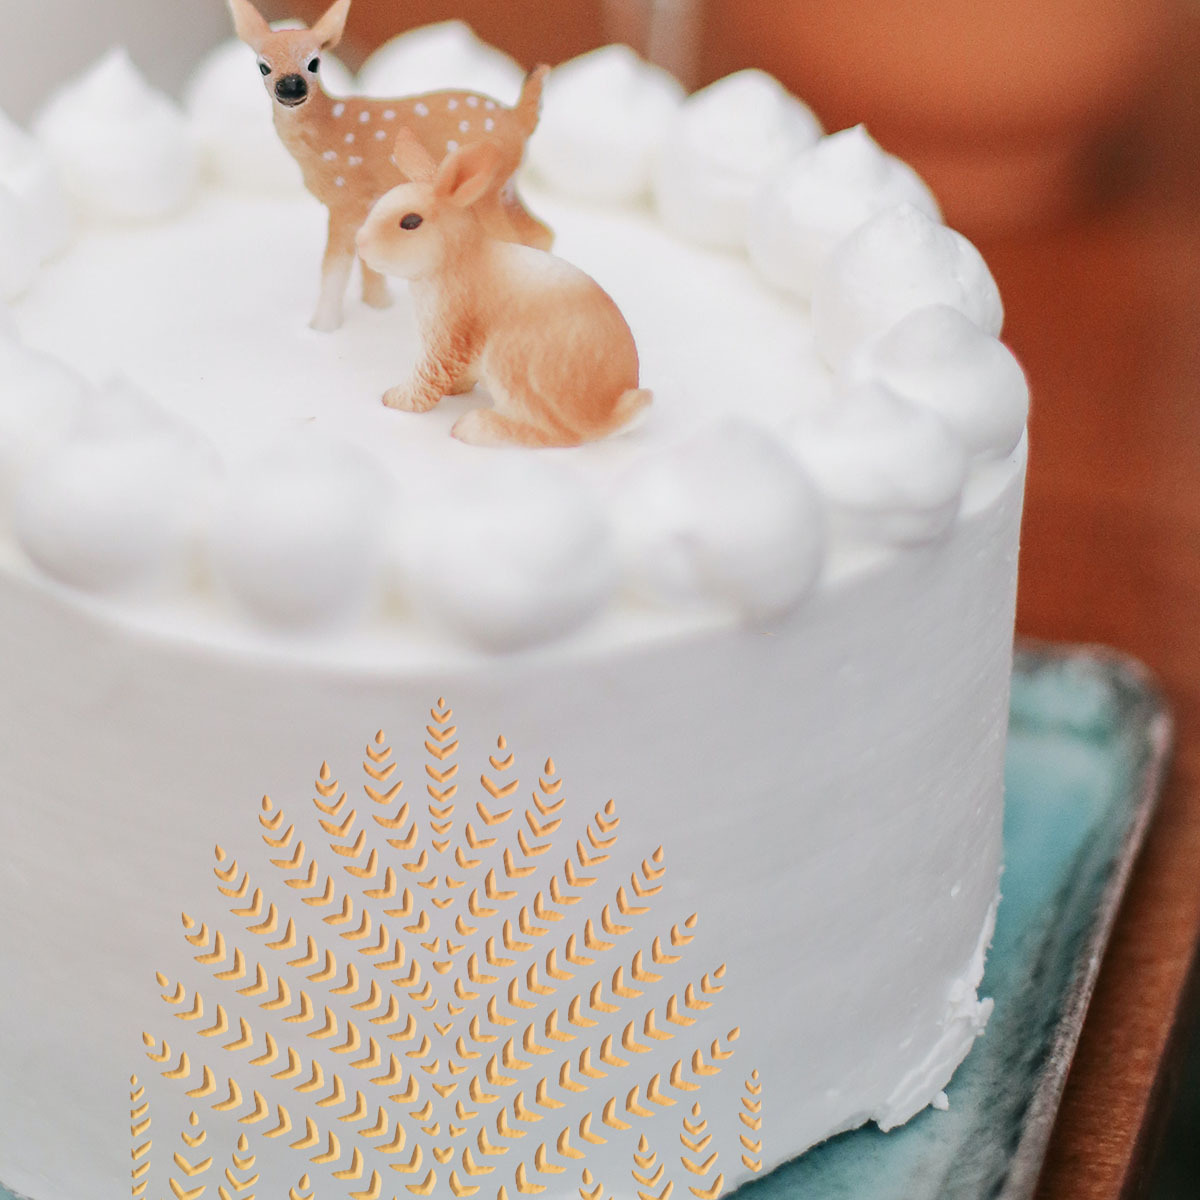 3PCS Cake Stencils Decorating Buttercream, Stencils for Cake Decorating,  Lace Cake Stencils & Templates for Wedding & Birthday Cake Decor,Hexagon